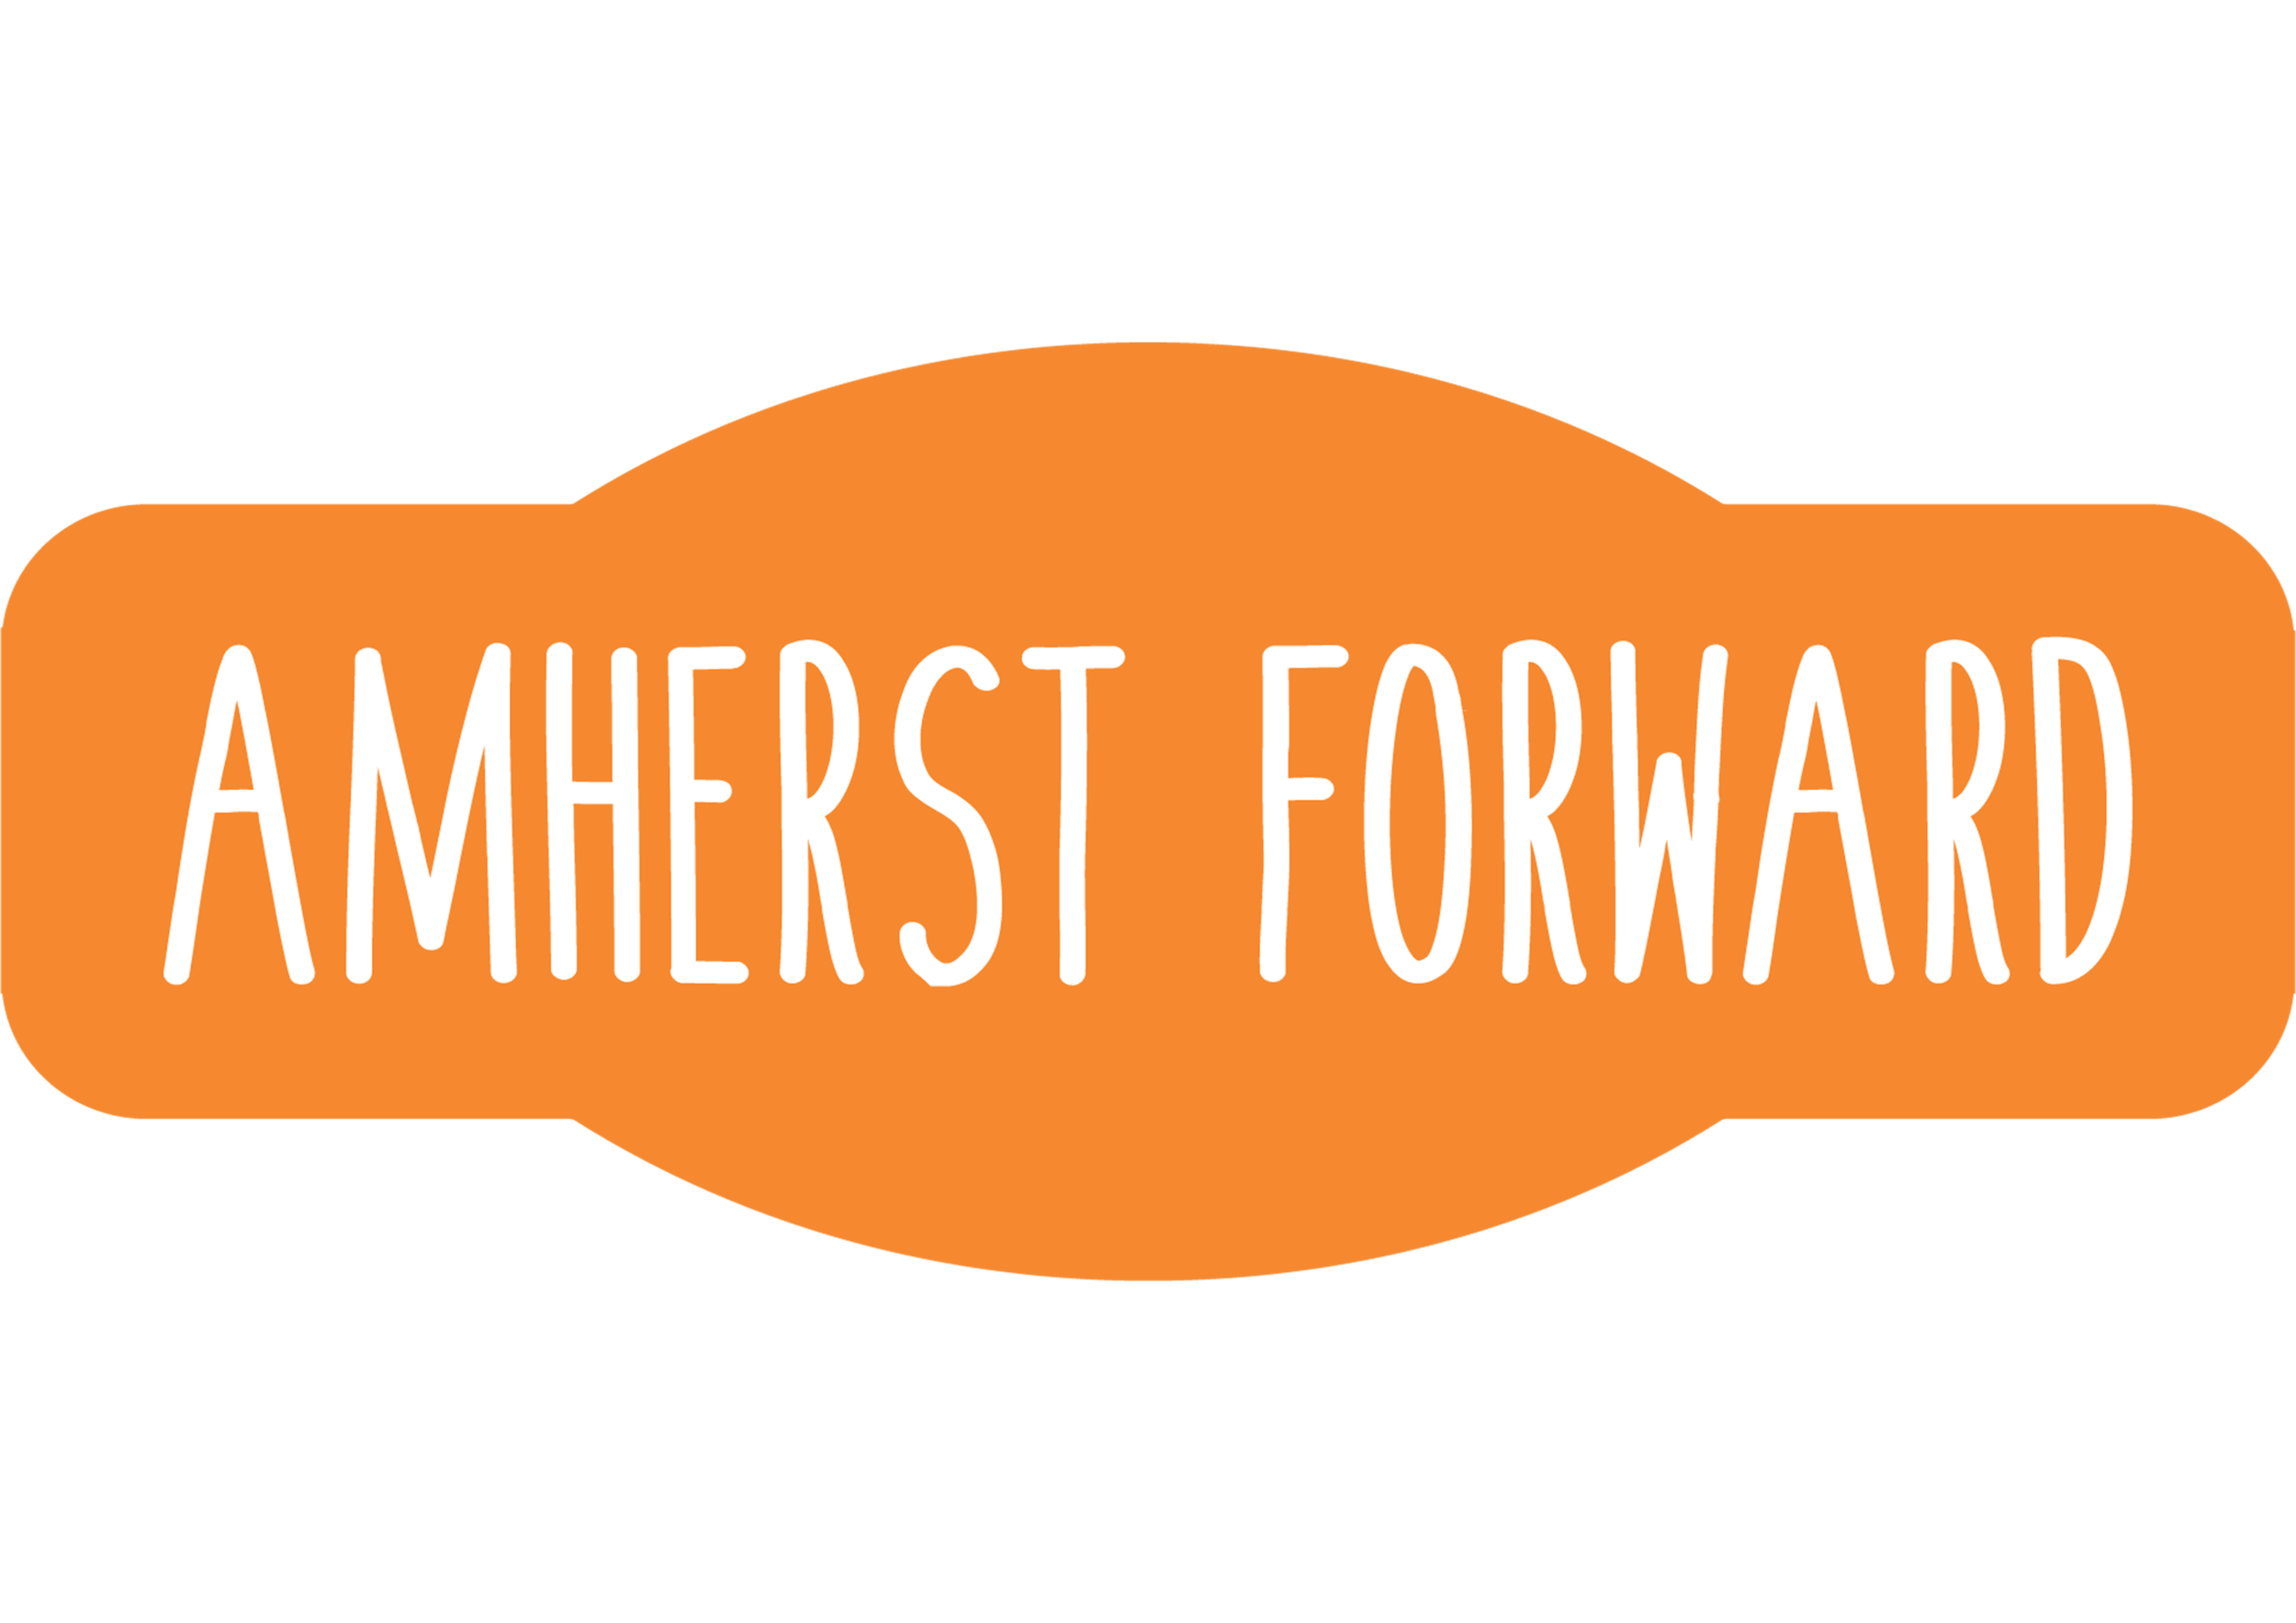 Amherst Forward